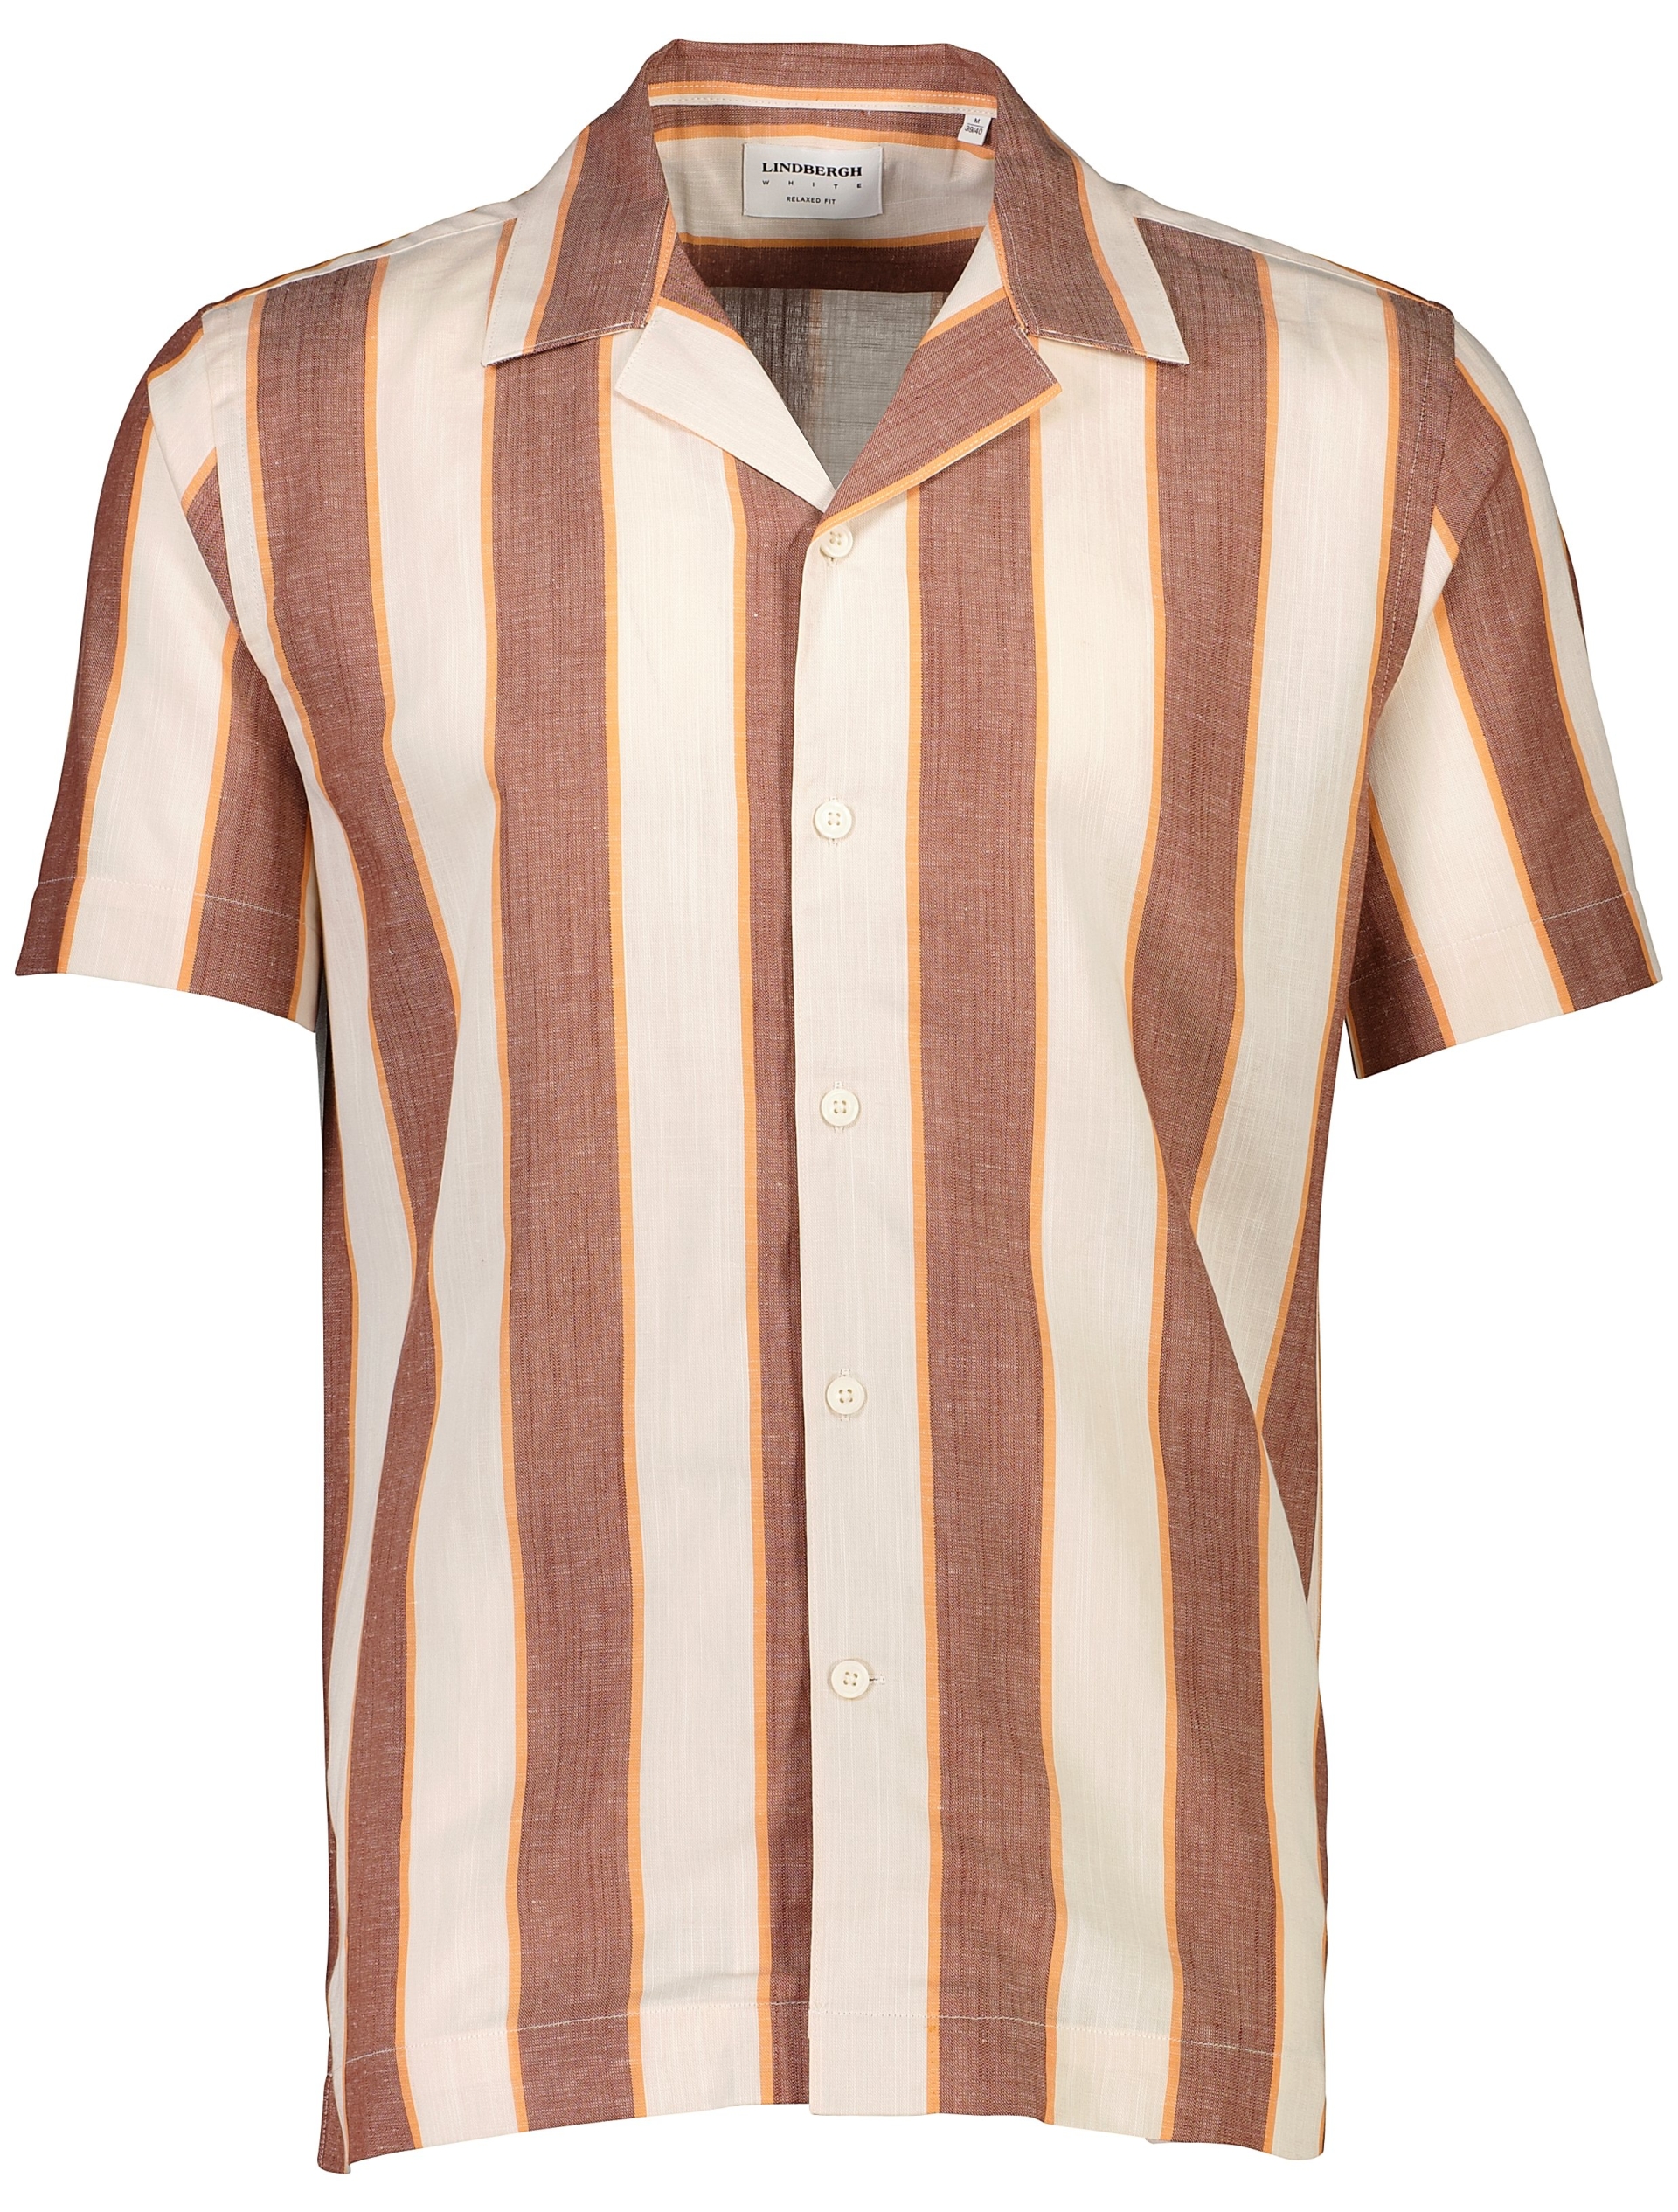 Lindbergh Linen shirt orange / burnt clay